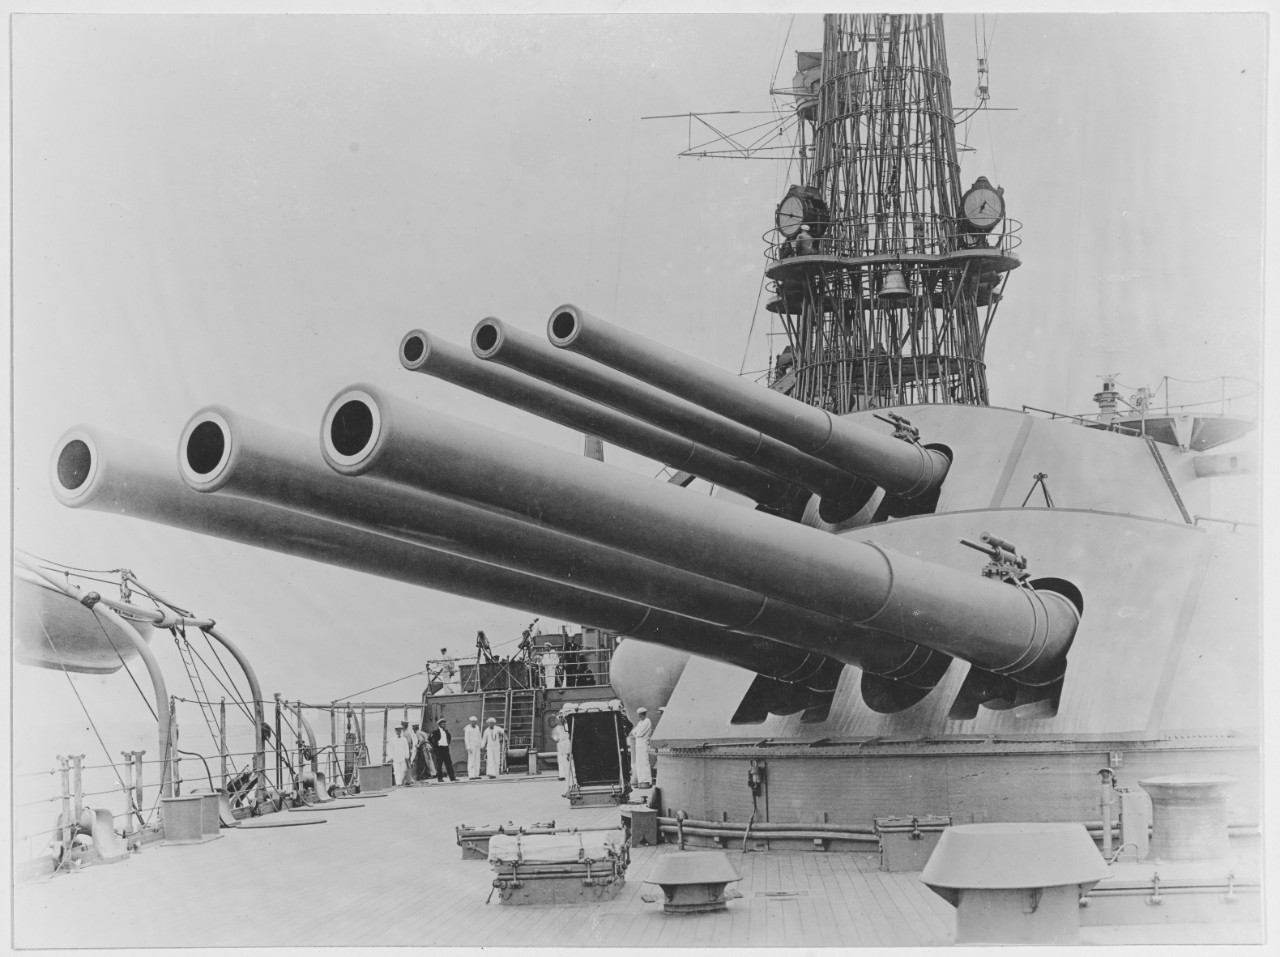 Fighting turret of the battleship USS PENNSYLVANIA